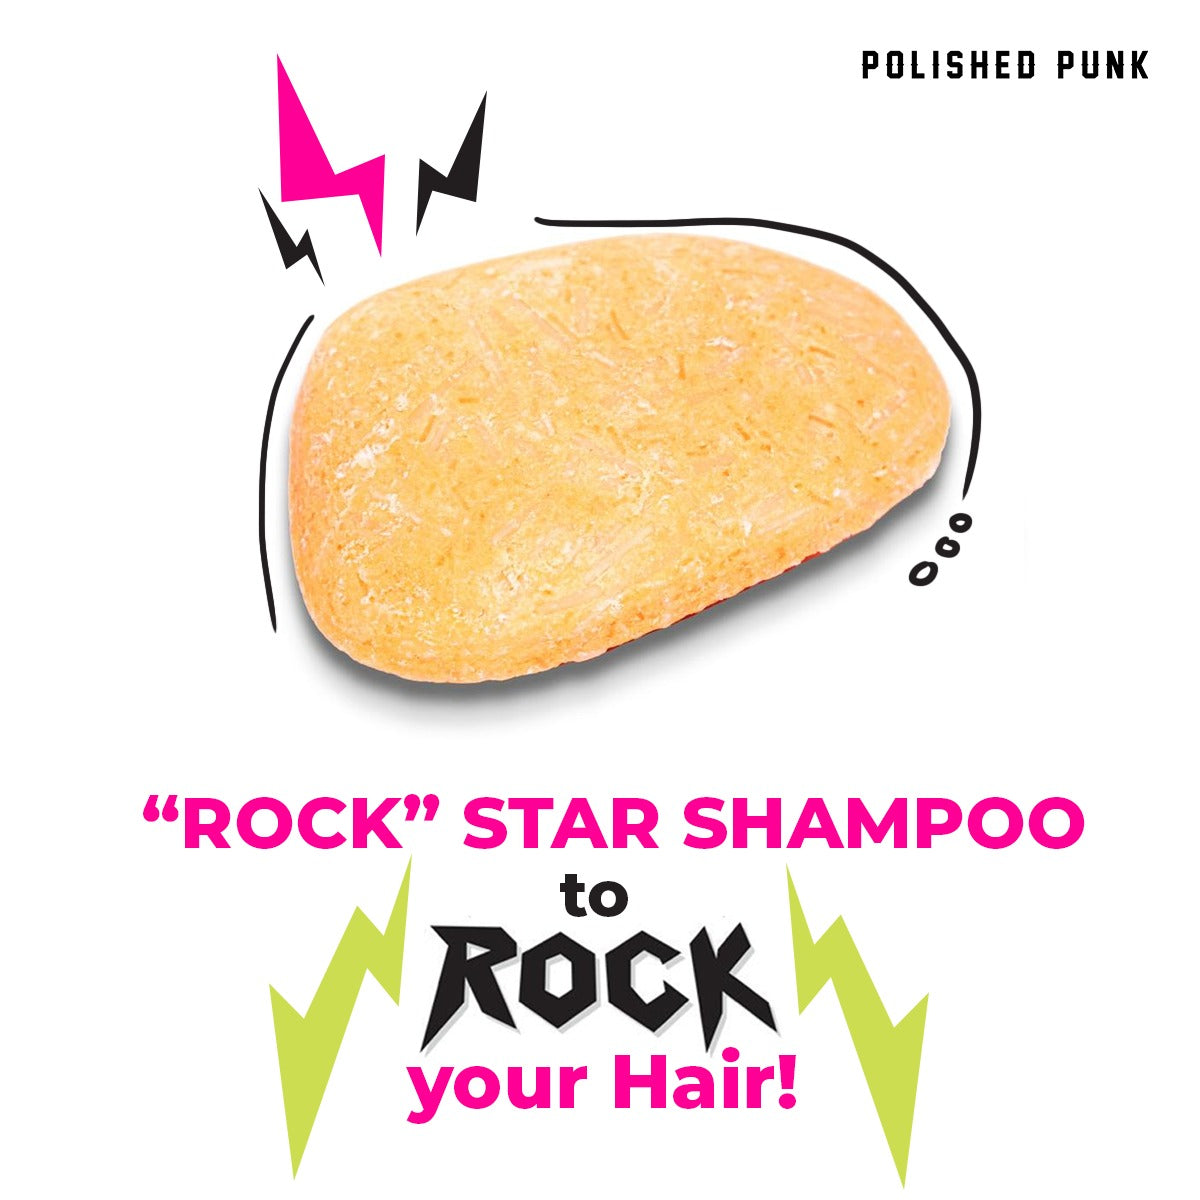 “Rock” Star Shampoo